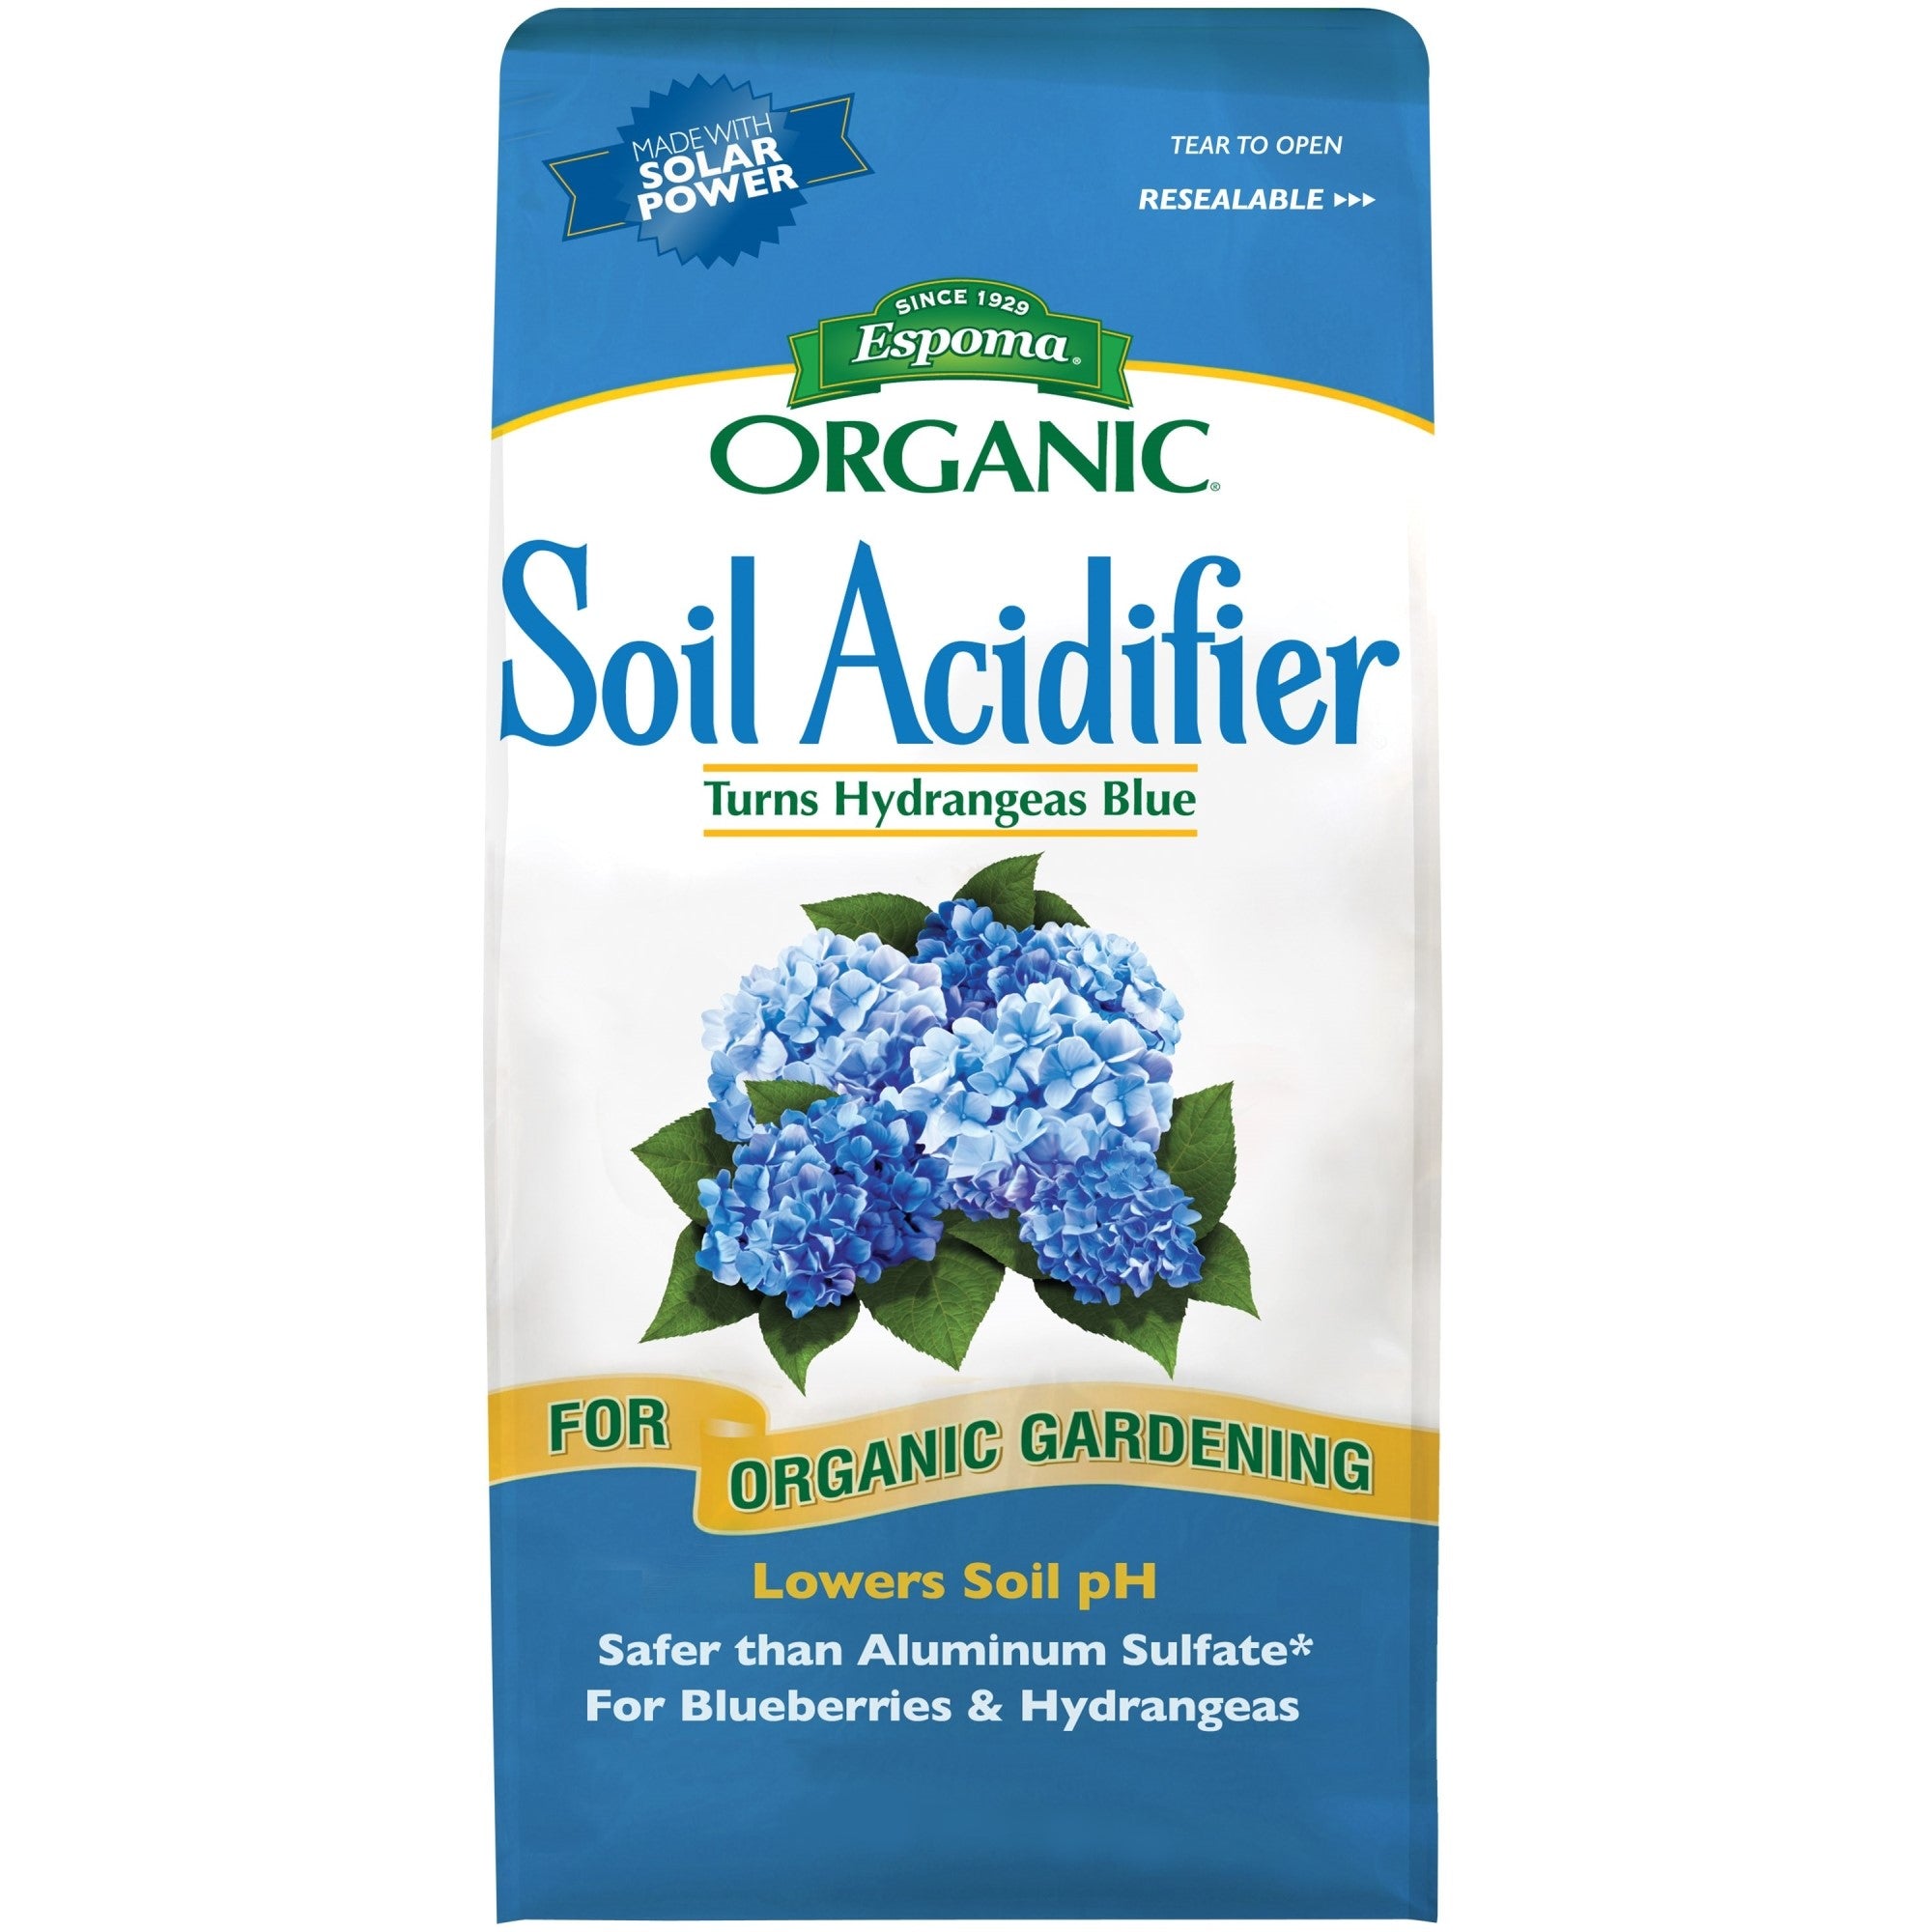 Espoma Organic Soil Acidifier Soil Amendment for Organic Gardening, Lowers Soil pH and Turns Hydrangeas Blue! Ideal for Blueberries & Hydrangeas